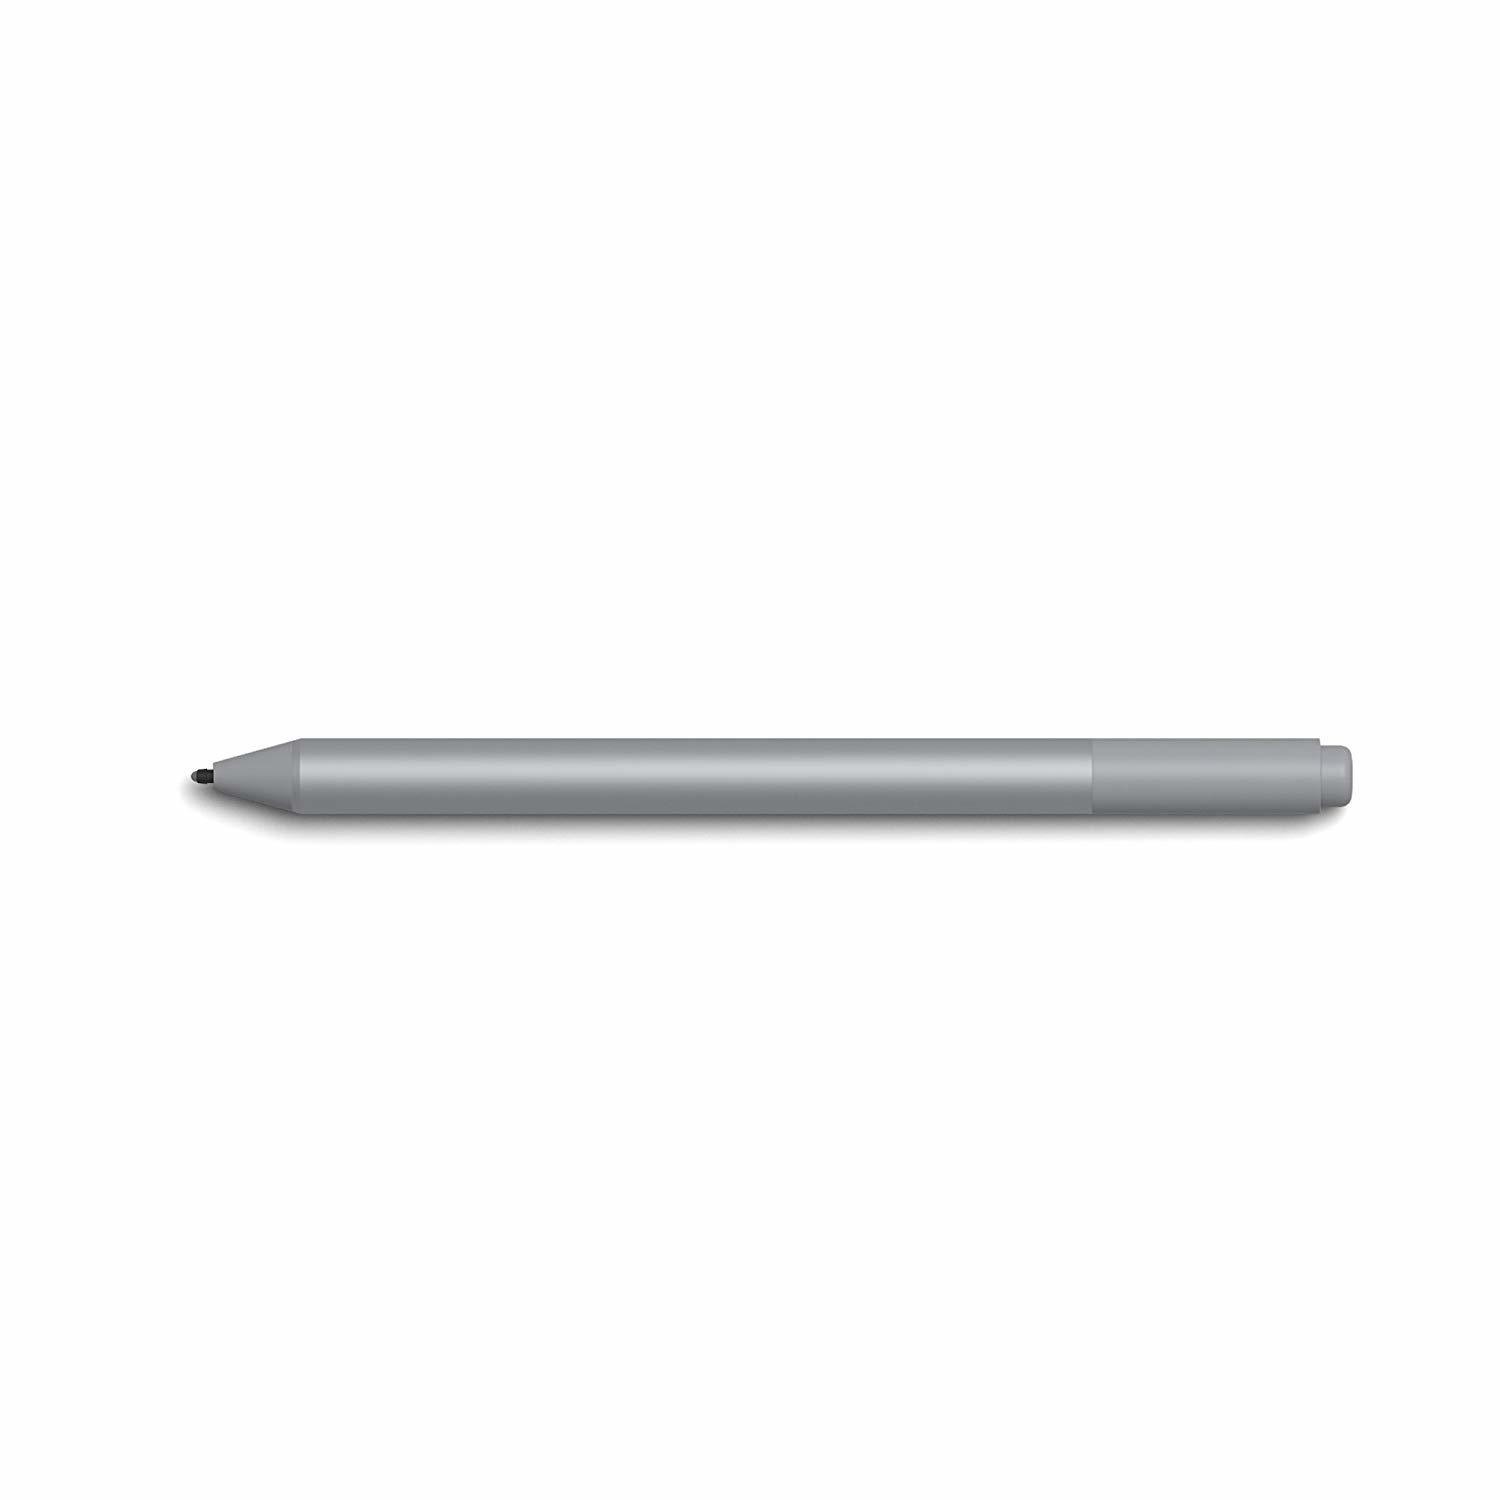 【新品未使用】Surface Pen Silver 1776